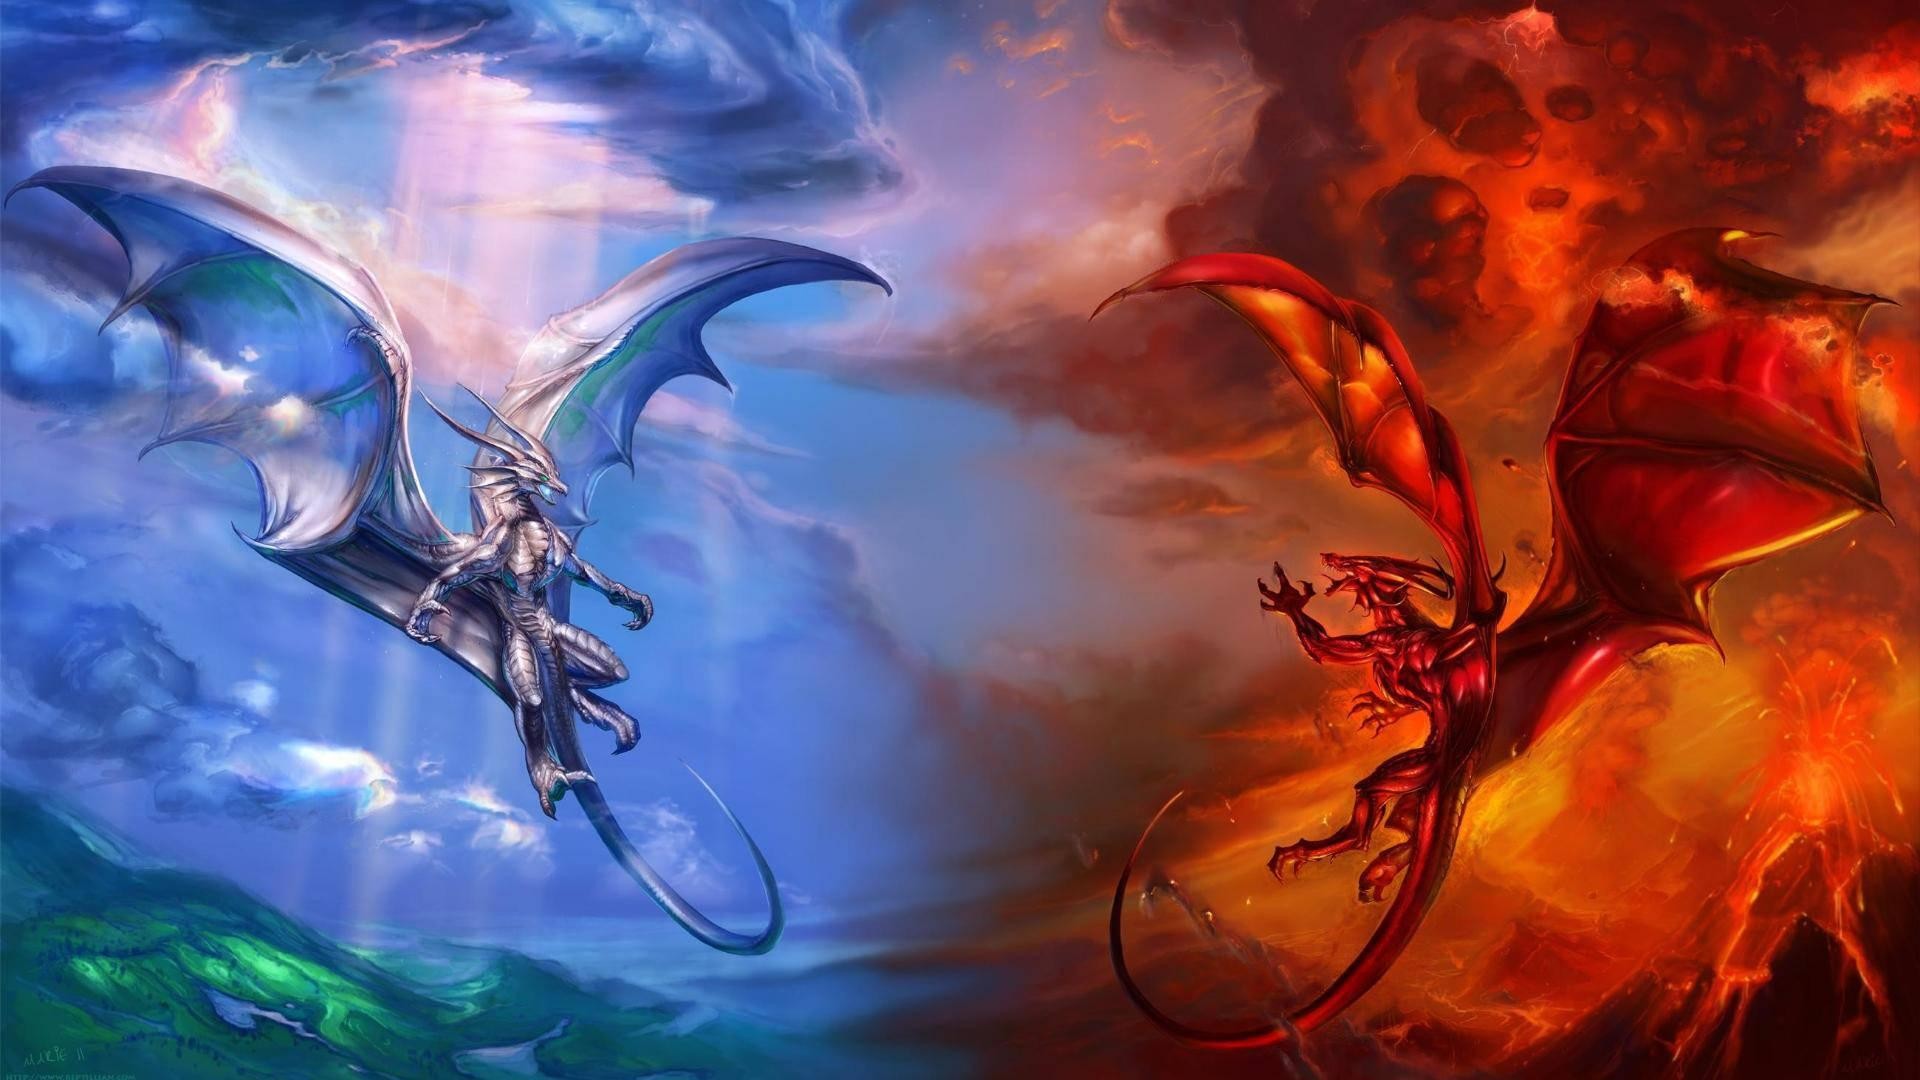 Ice dragon vs fire dragon World of fantasy art design HD wallpaper Wallpapers View